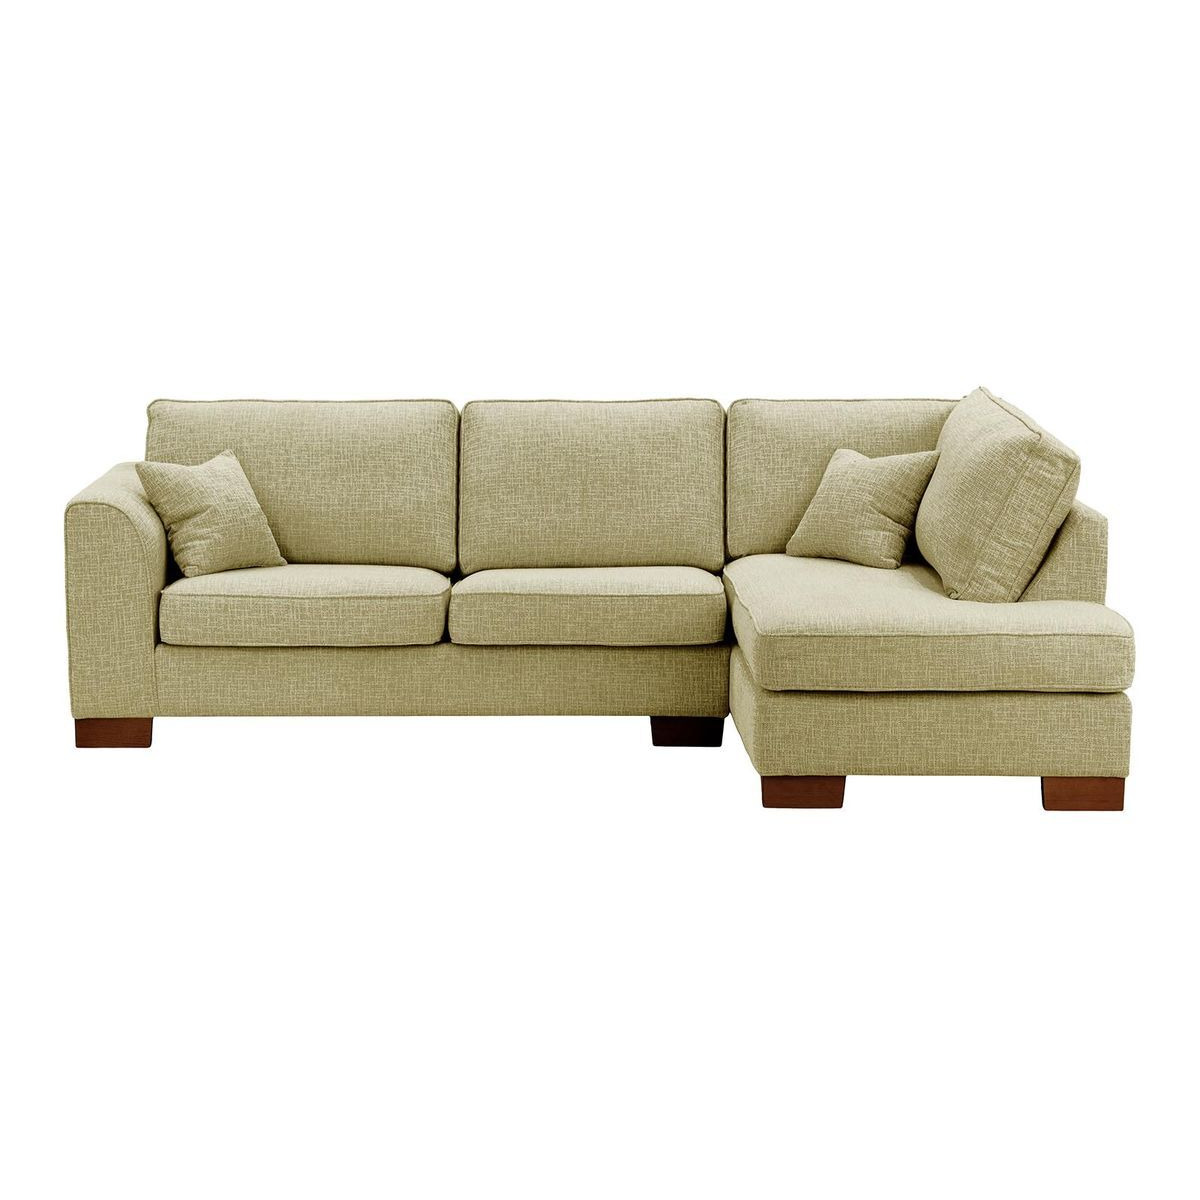 Avos Right Hand Corner Sofa Bed, olive green, Leg colour: white - image 1